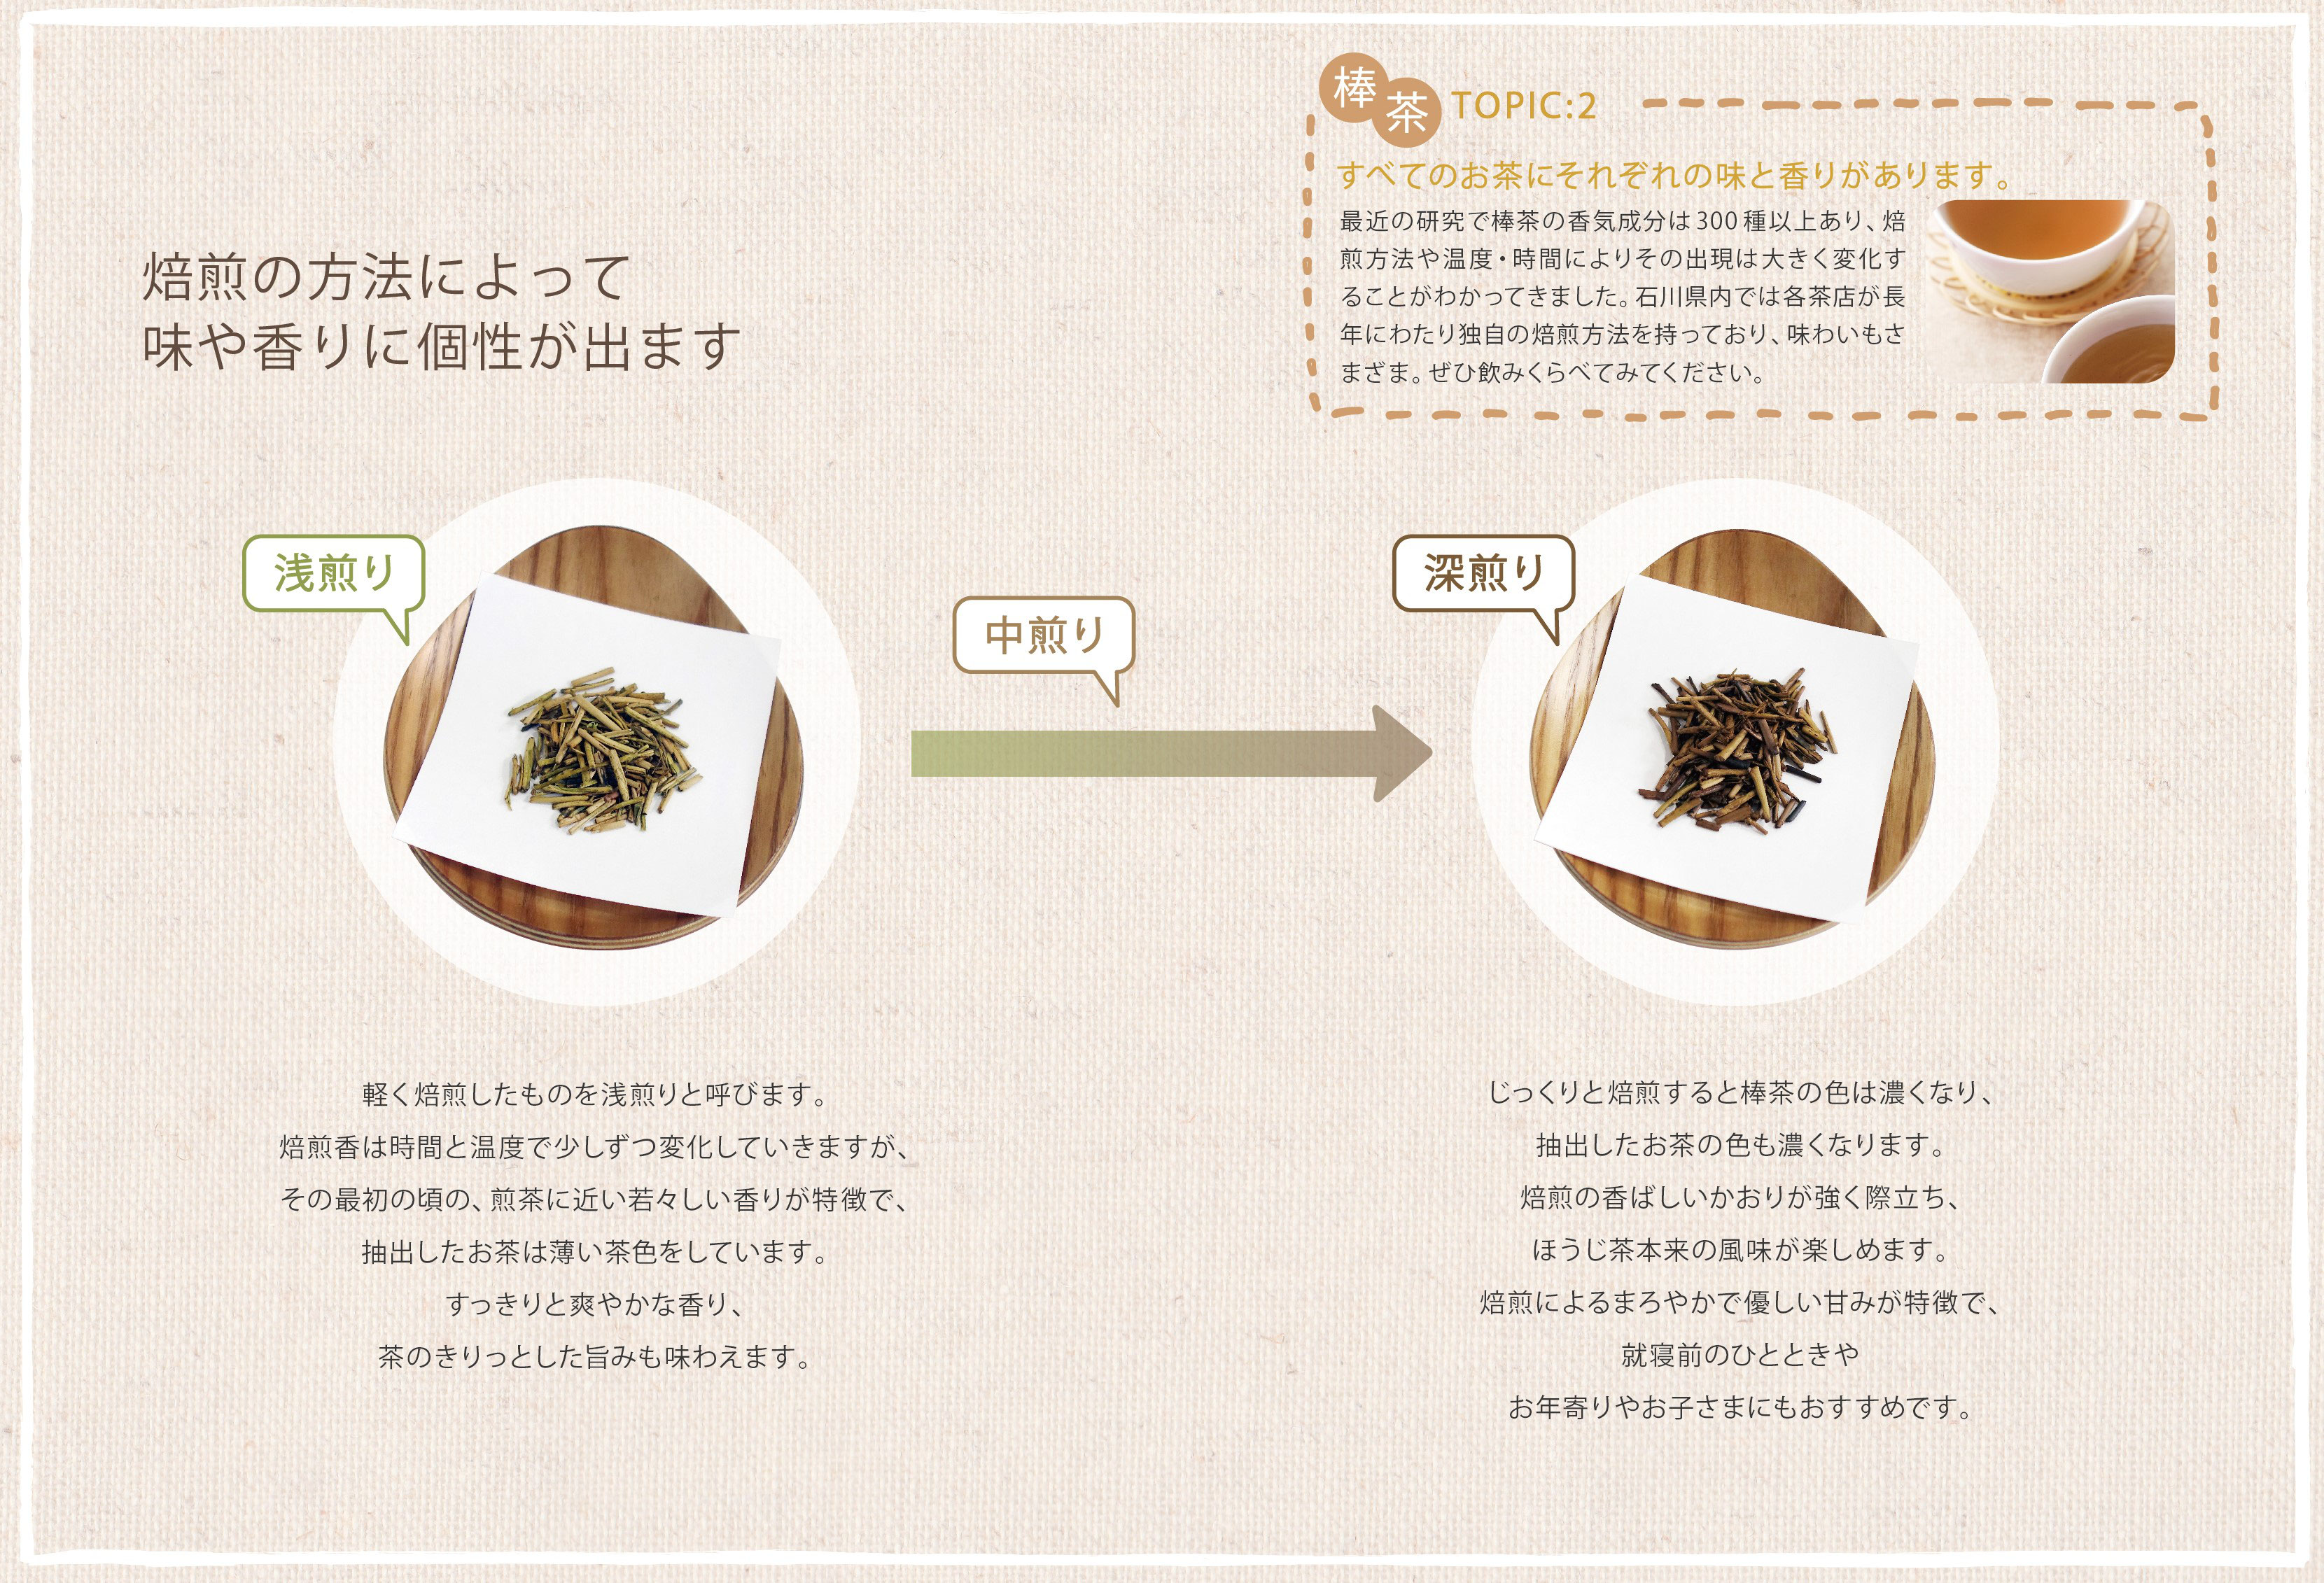 加賀棒茶の焙煎方法 いれ方 石川県茶商工協同組合